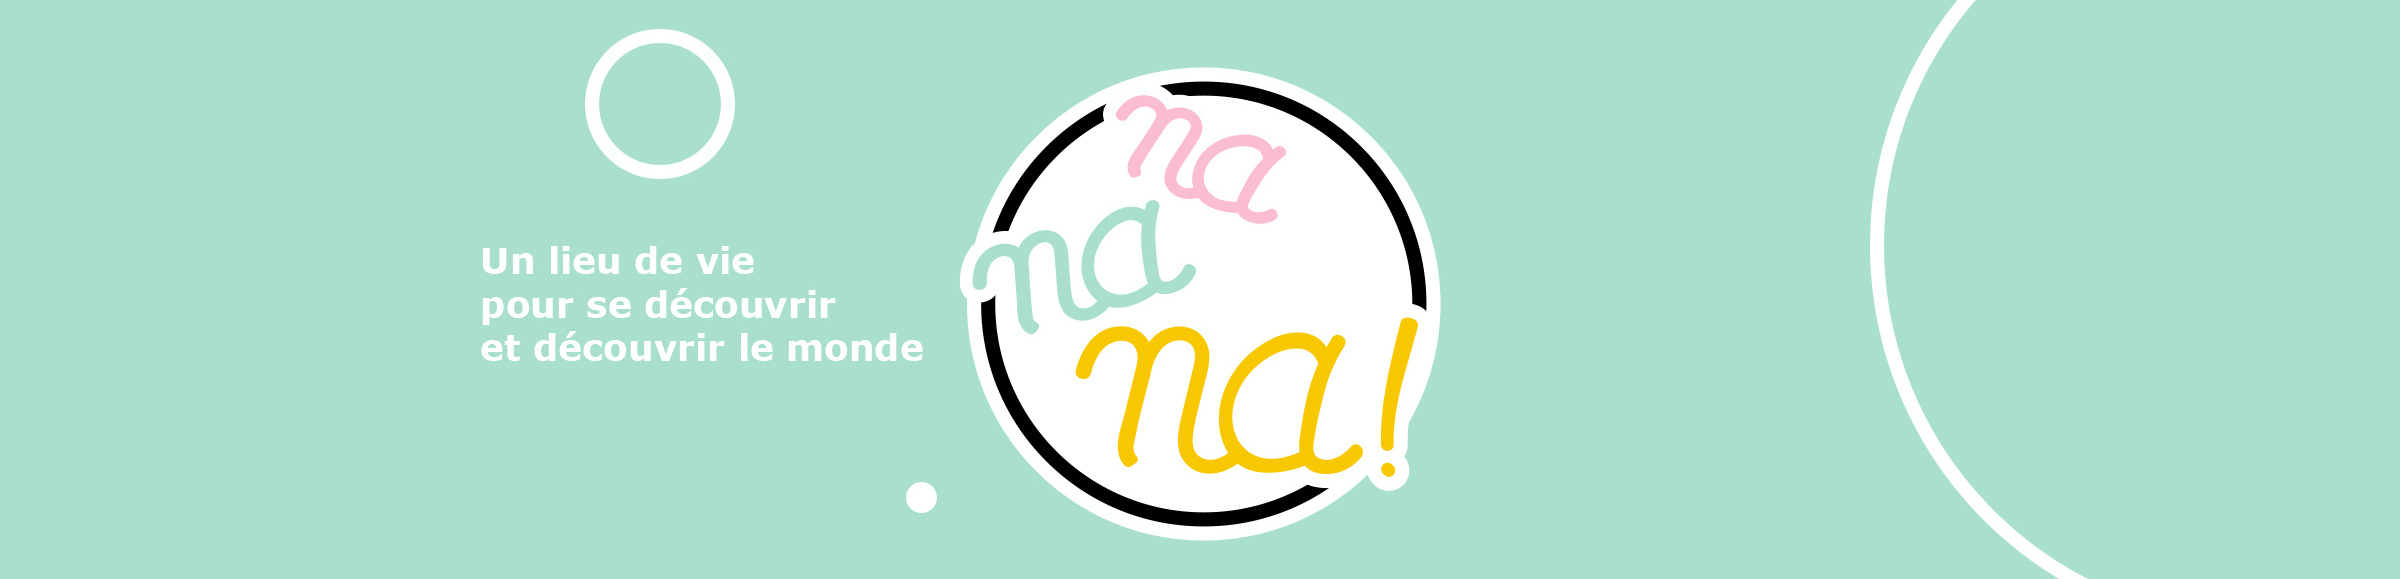 image logo nanana